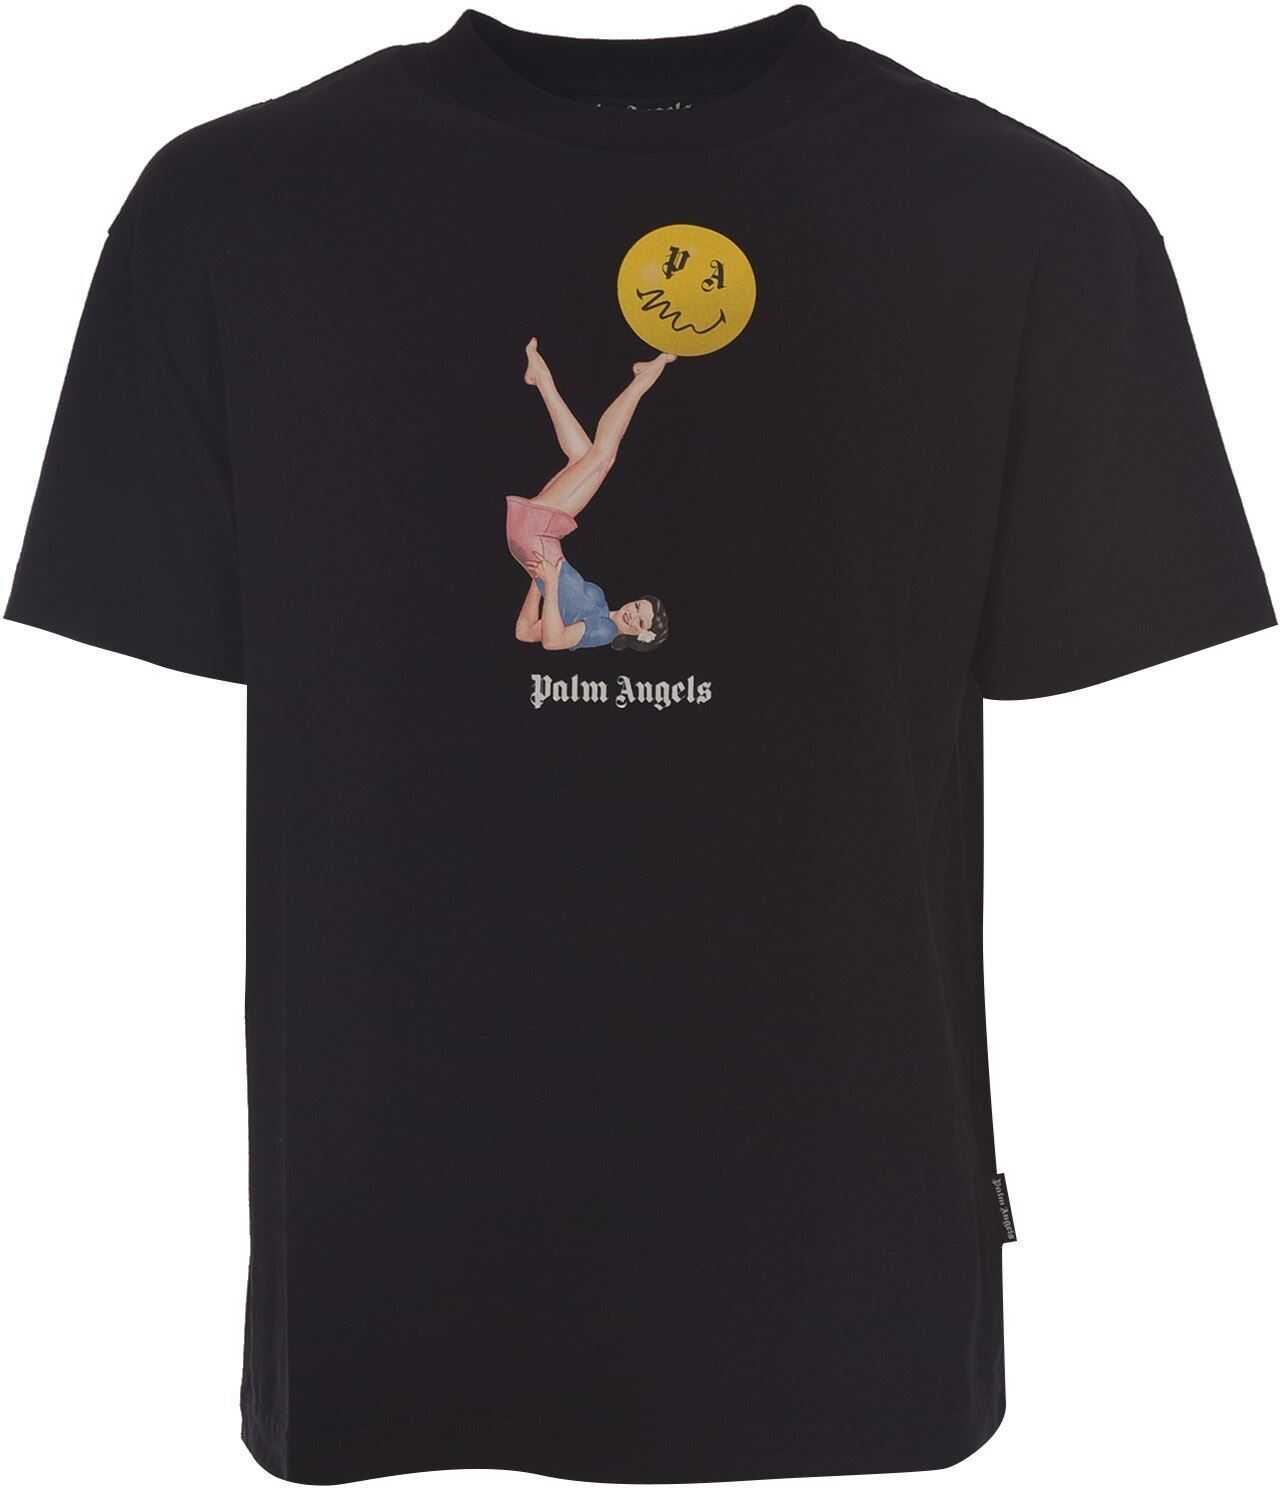 Palm Angels Juggler Pin Up T-Shirt In Black PMAA001R21JER0101030 Black